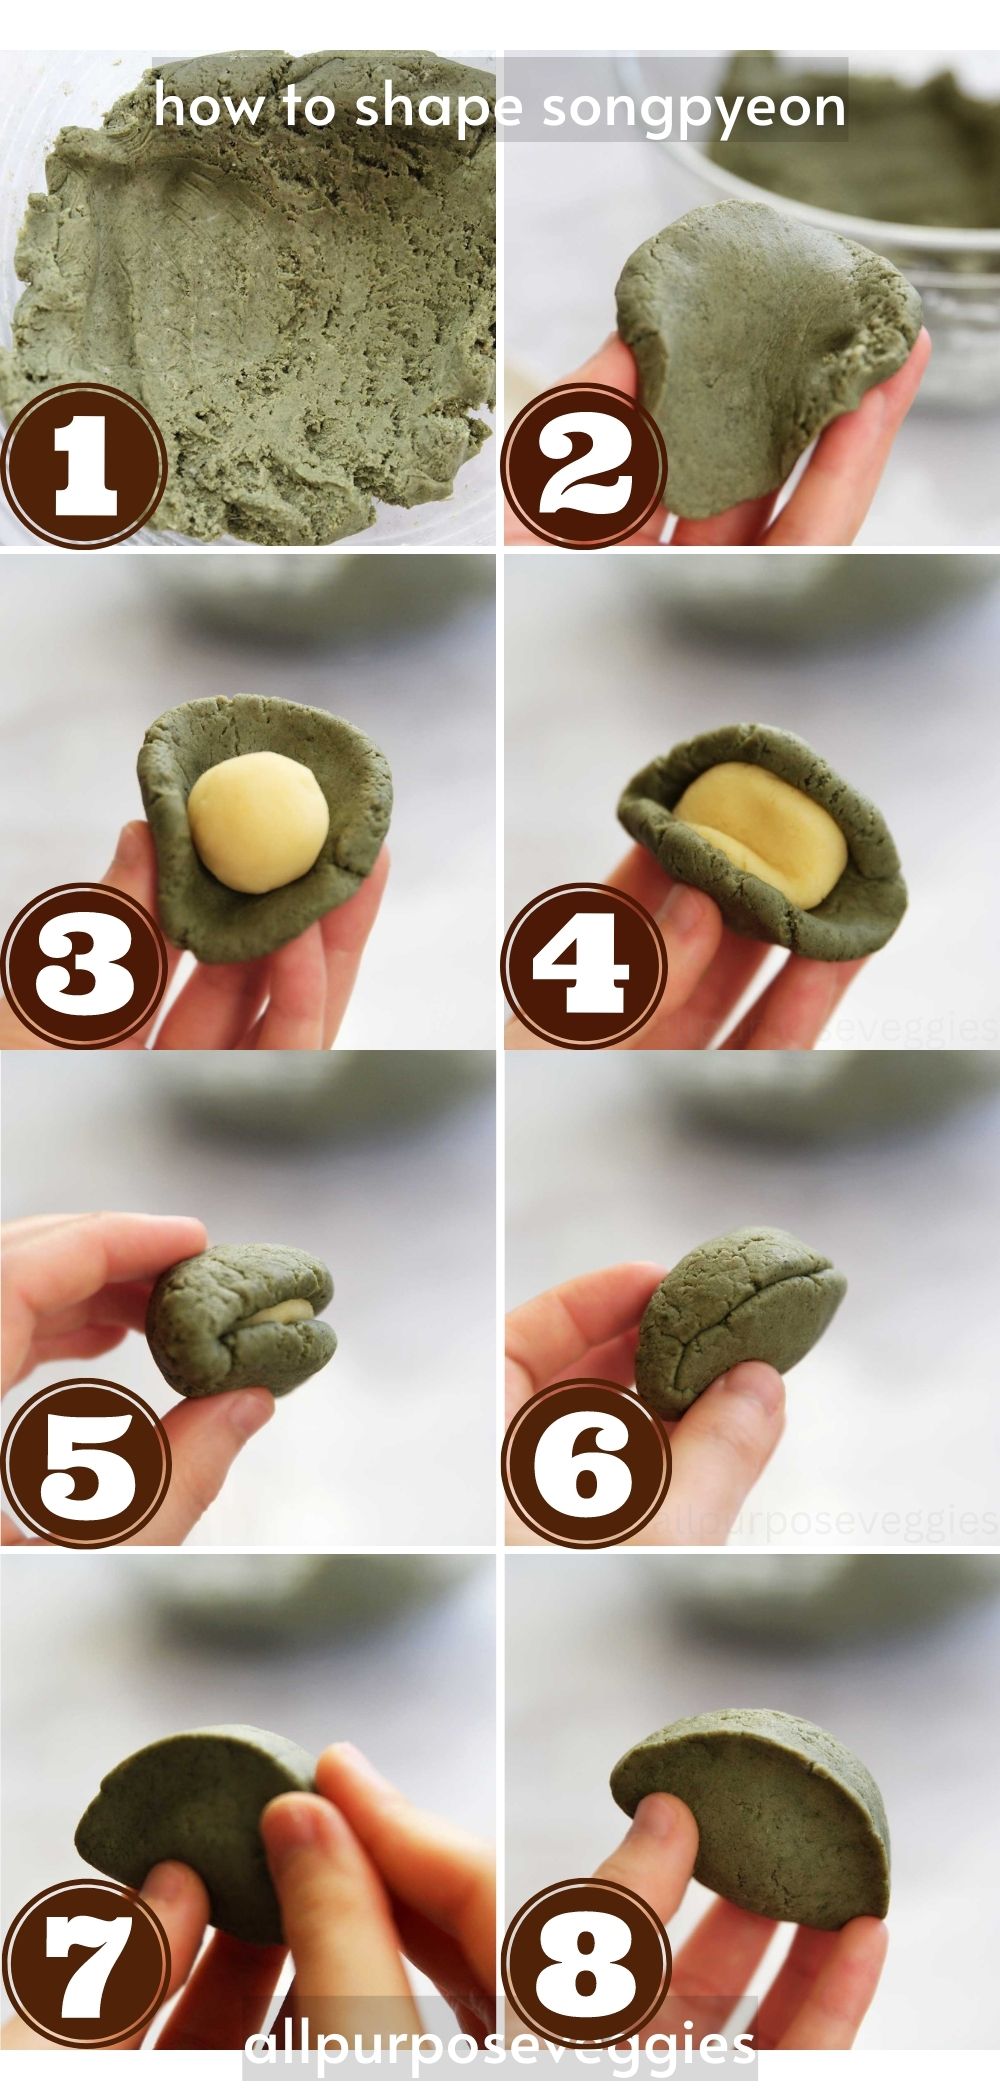 how to shape mugwort songpyeon 고구마송편 - watermarked